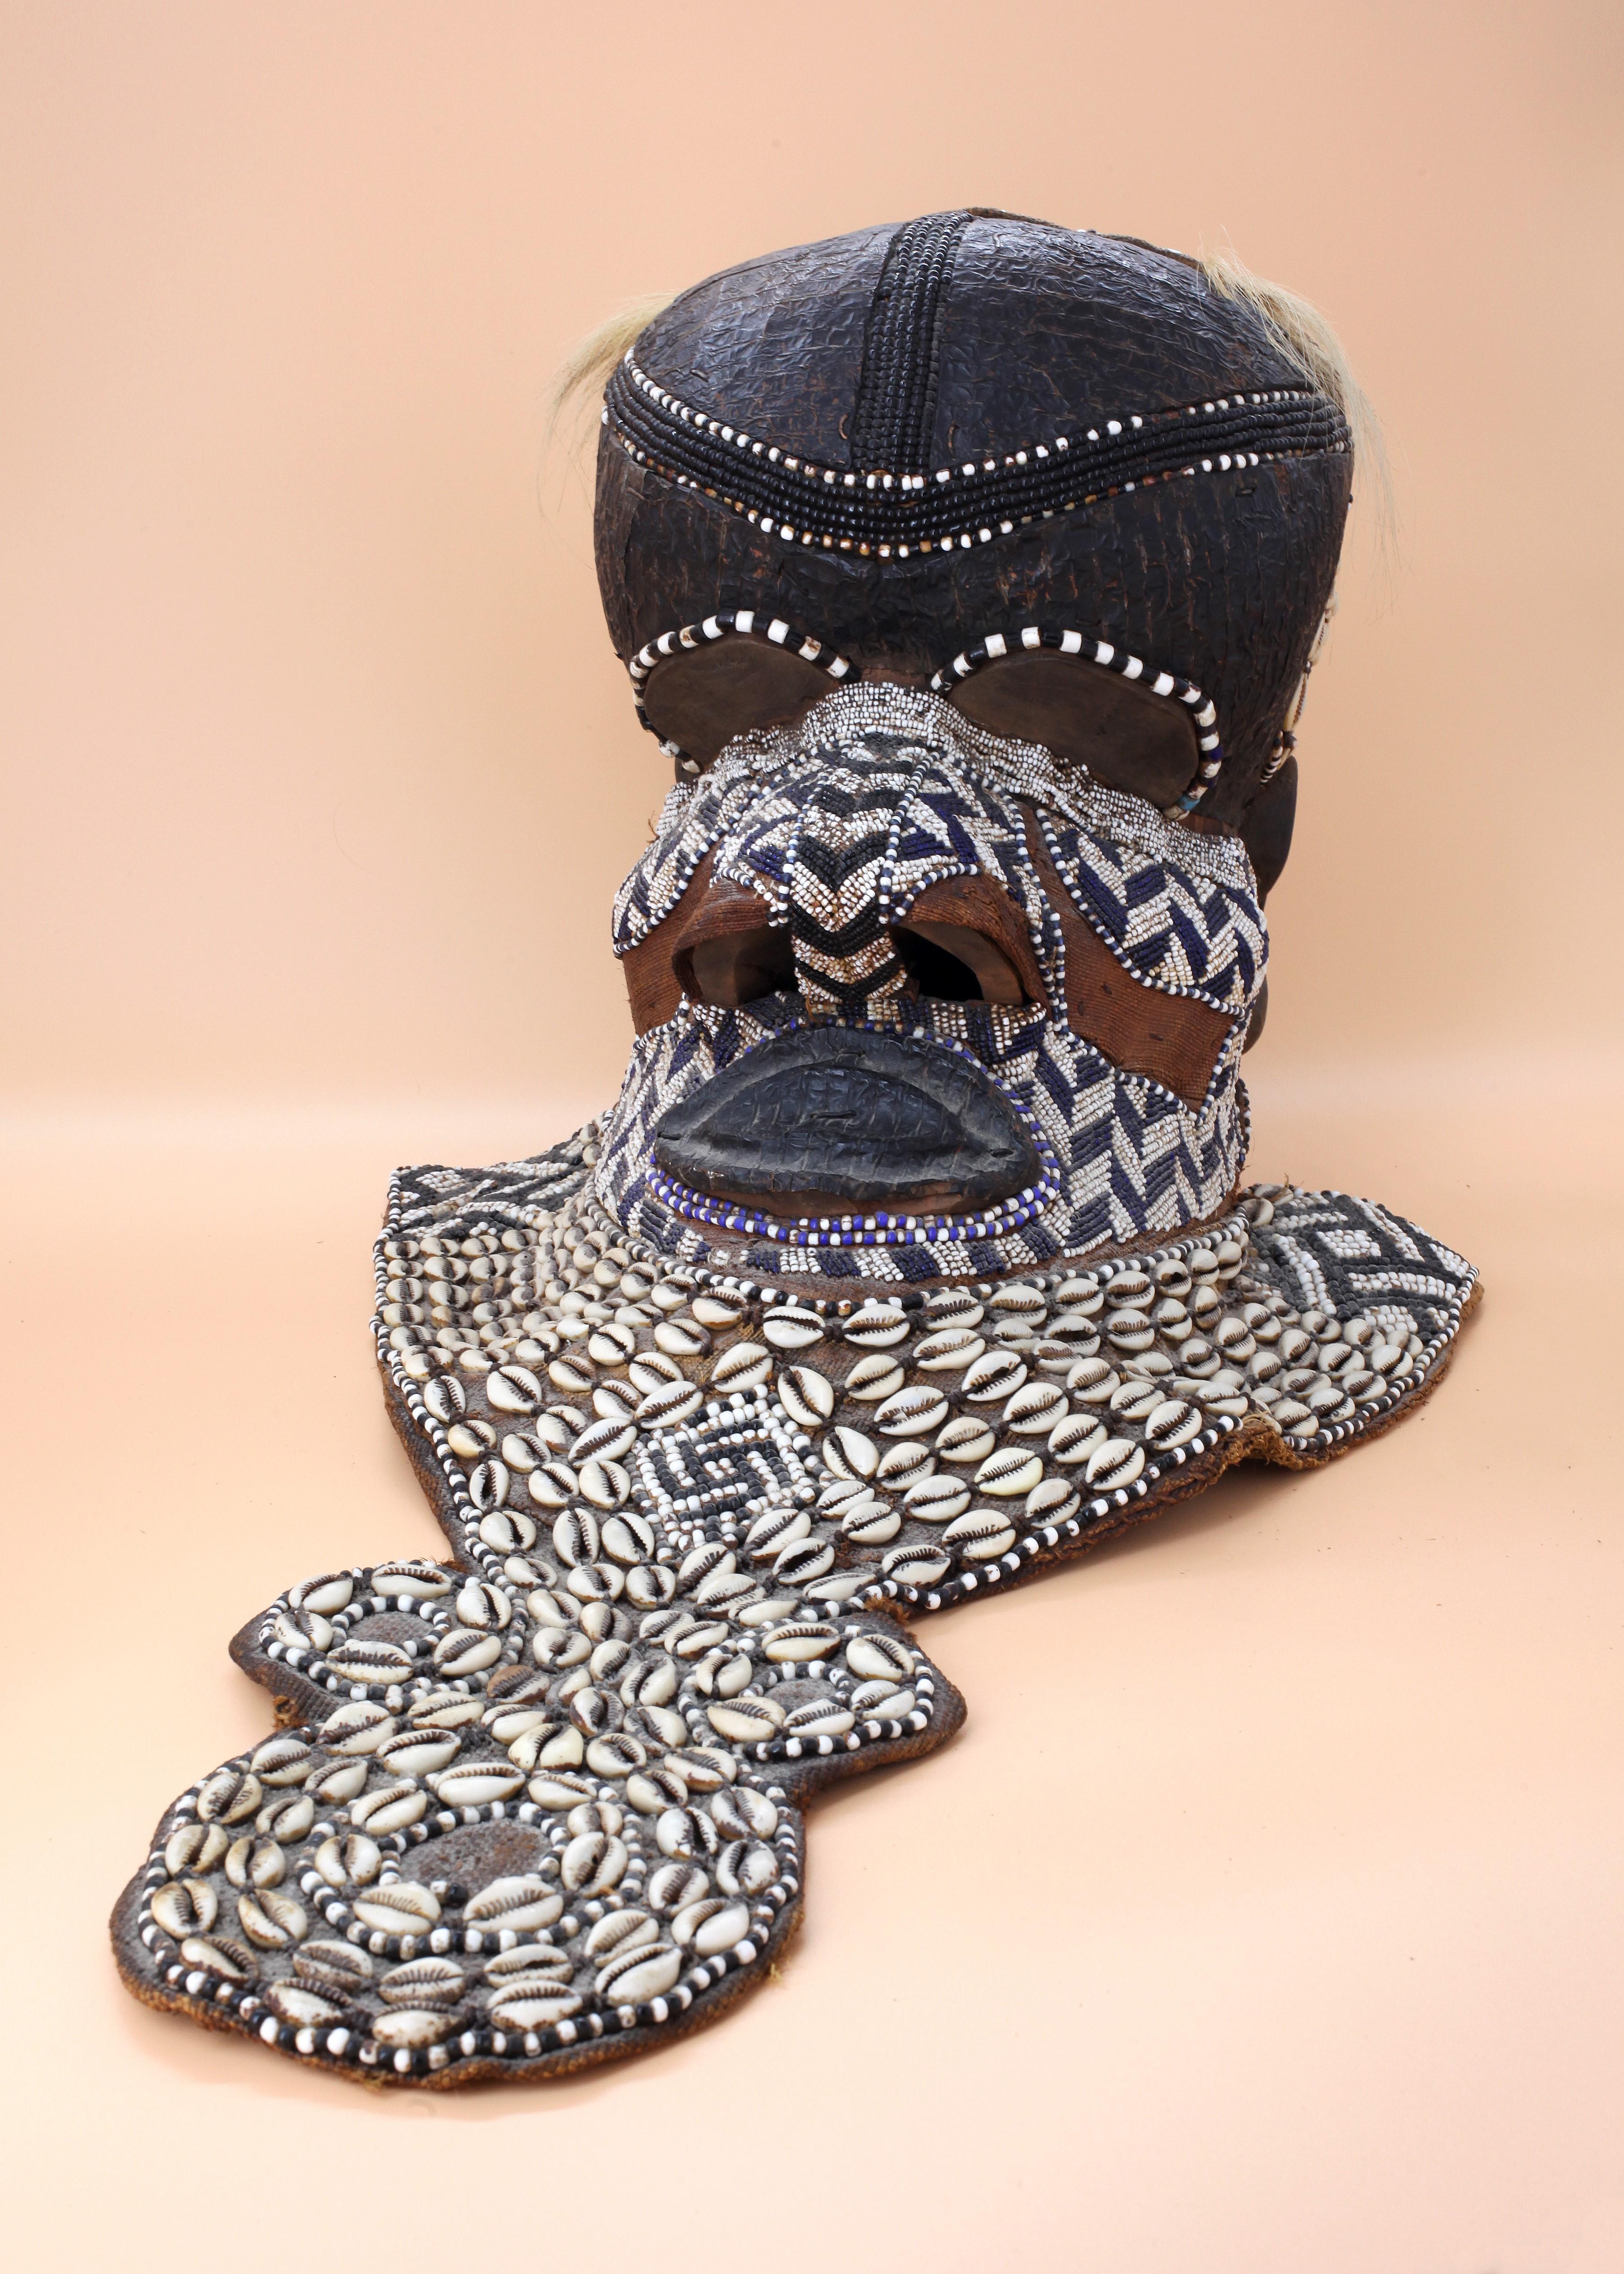 Hand-Carved Kuba Bwoom Mask For Sale